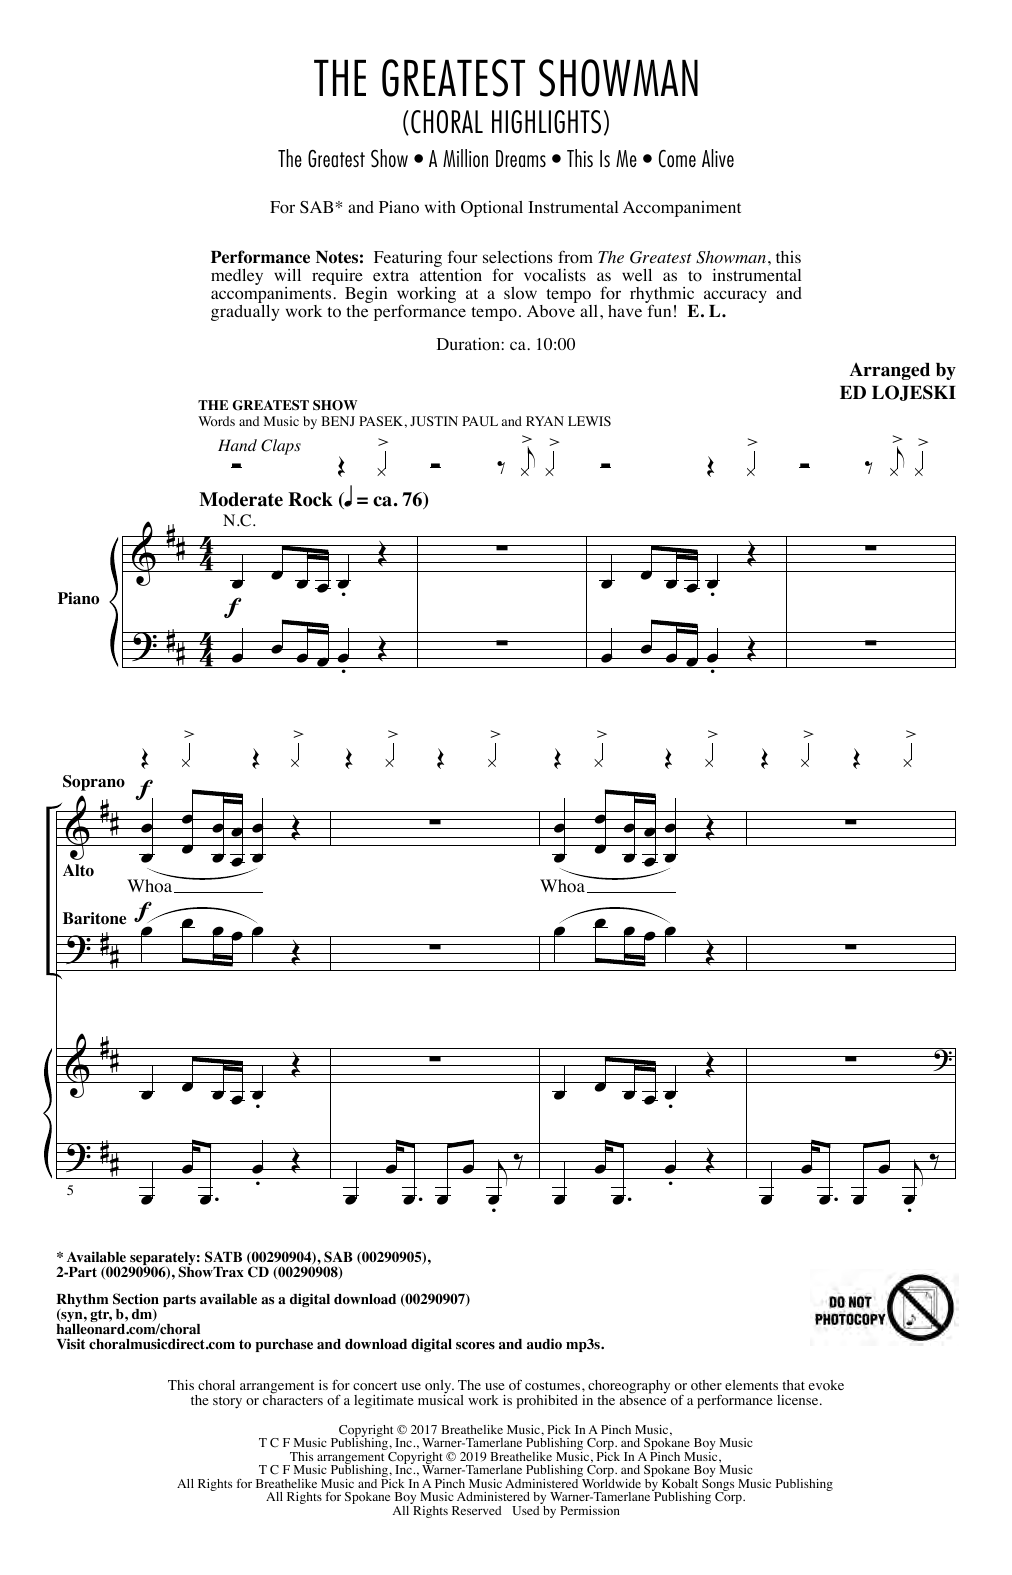 Pasek & Paul The Greatest Showman (Choral Highlights) (arr. Ed Lojeski) Sheet Music Notes & Chords for SAB Choir - Download or Print PDF